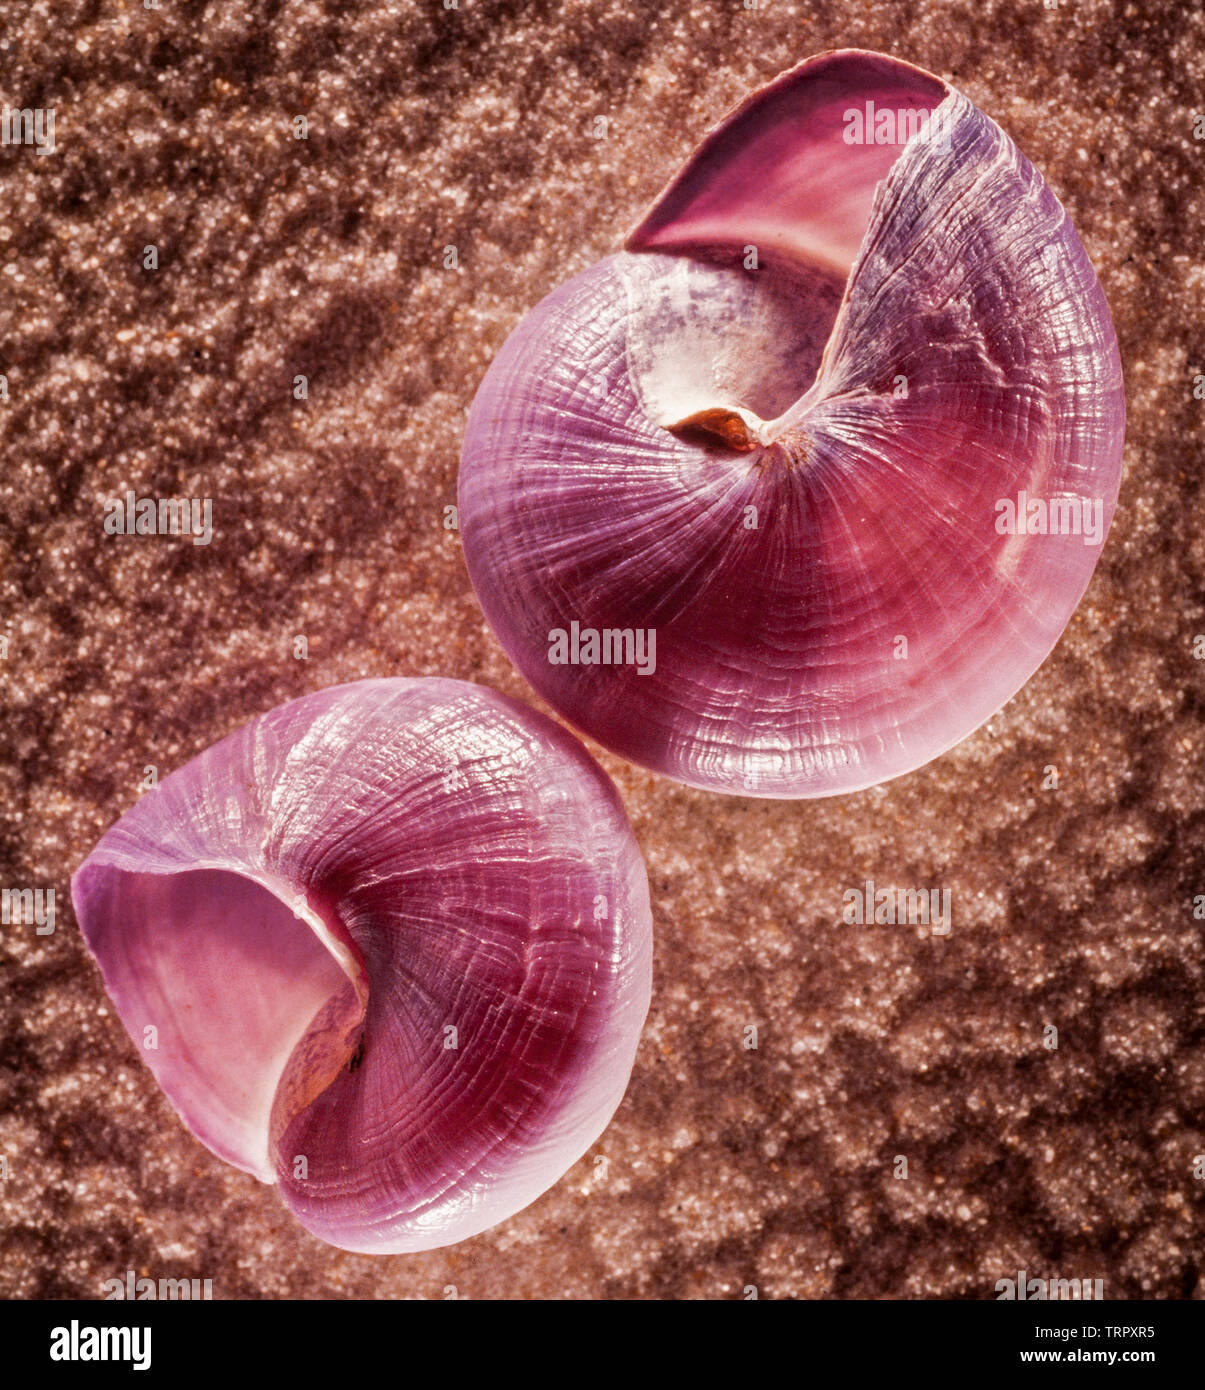 Viola comune lumaca di mare, Janthina janthina Linnaeus, sulla sabbia ondulata Foto Stock